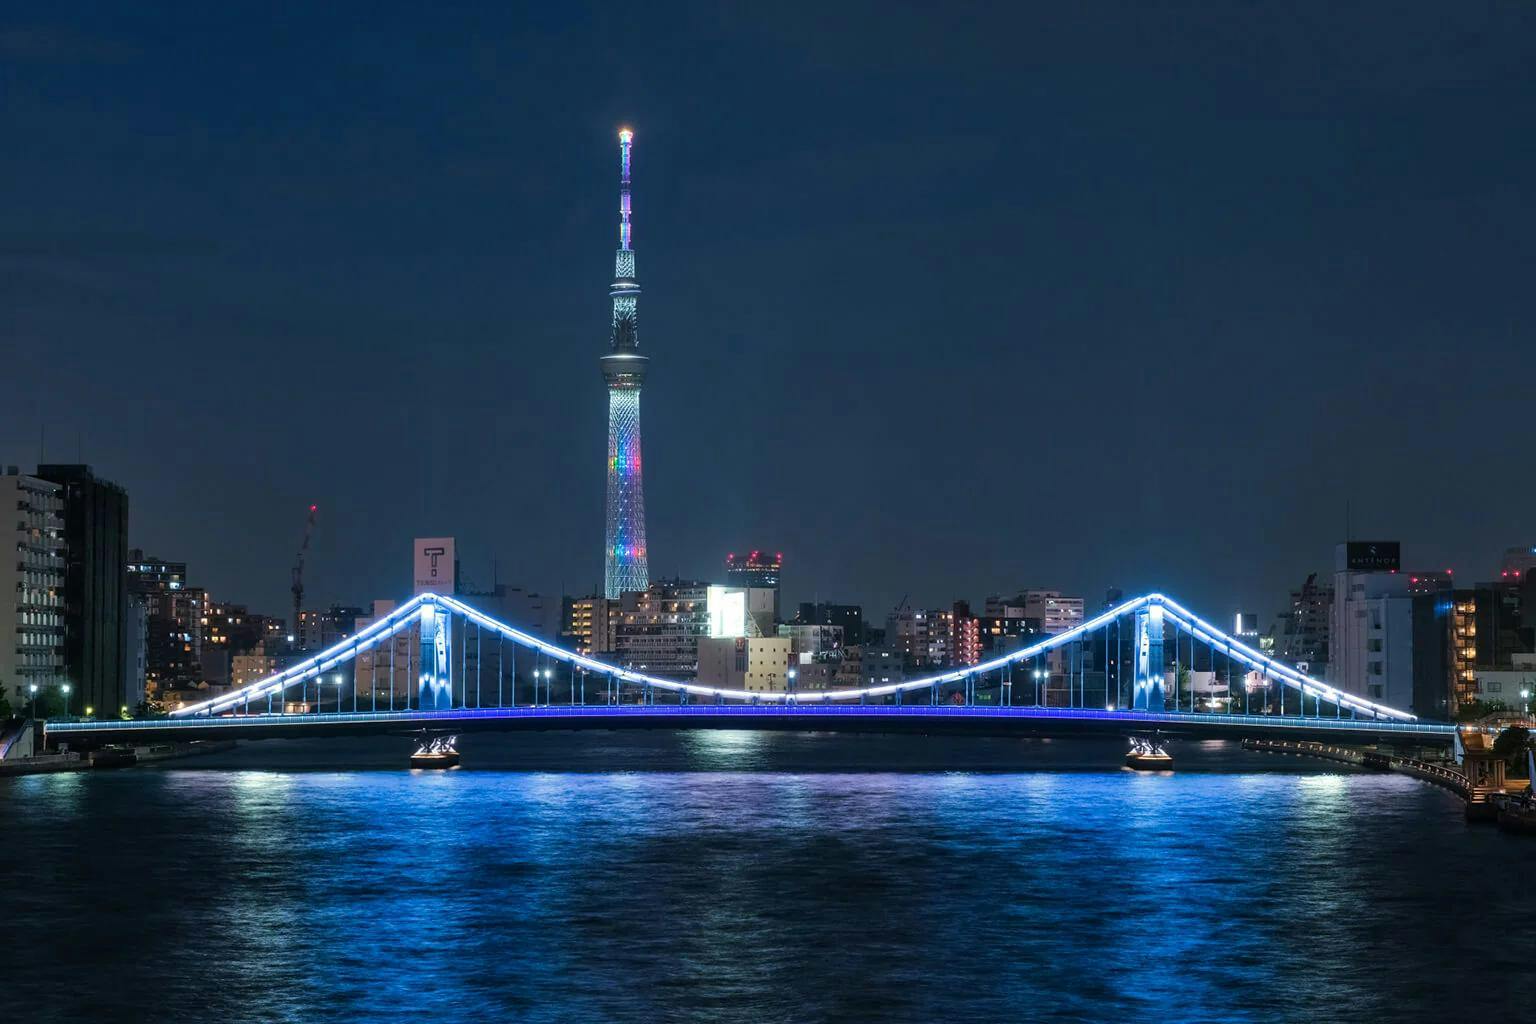 The Sumida River reflects the glow of the Tokyo Skytree and the Kiyosubashi Bridge at night